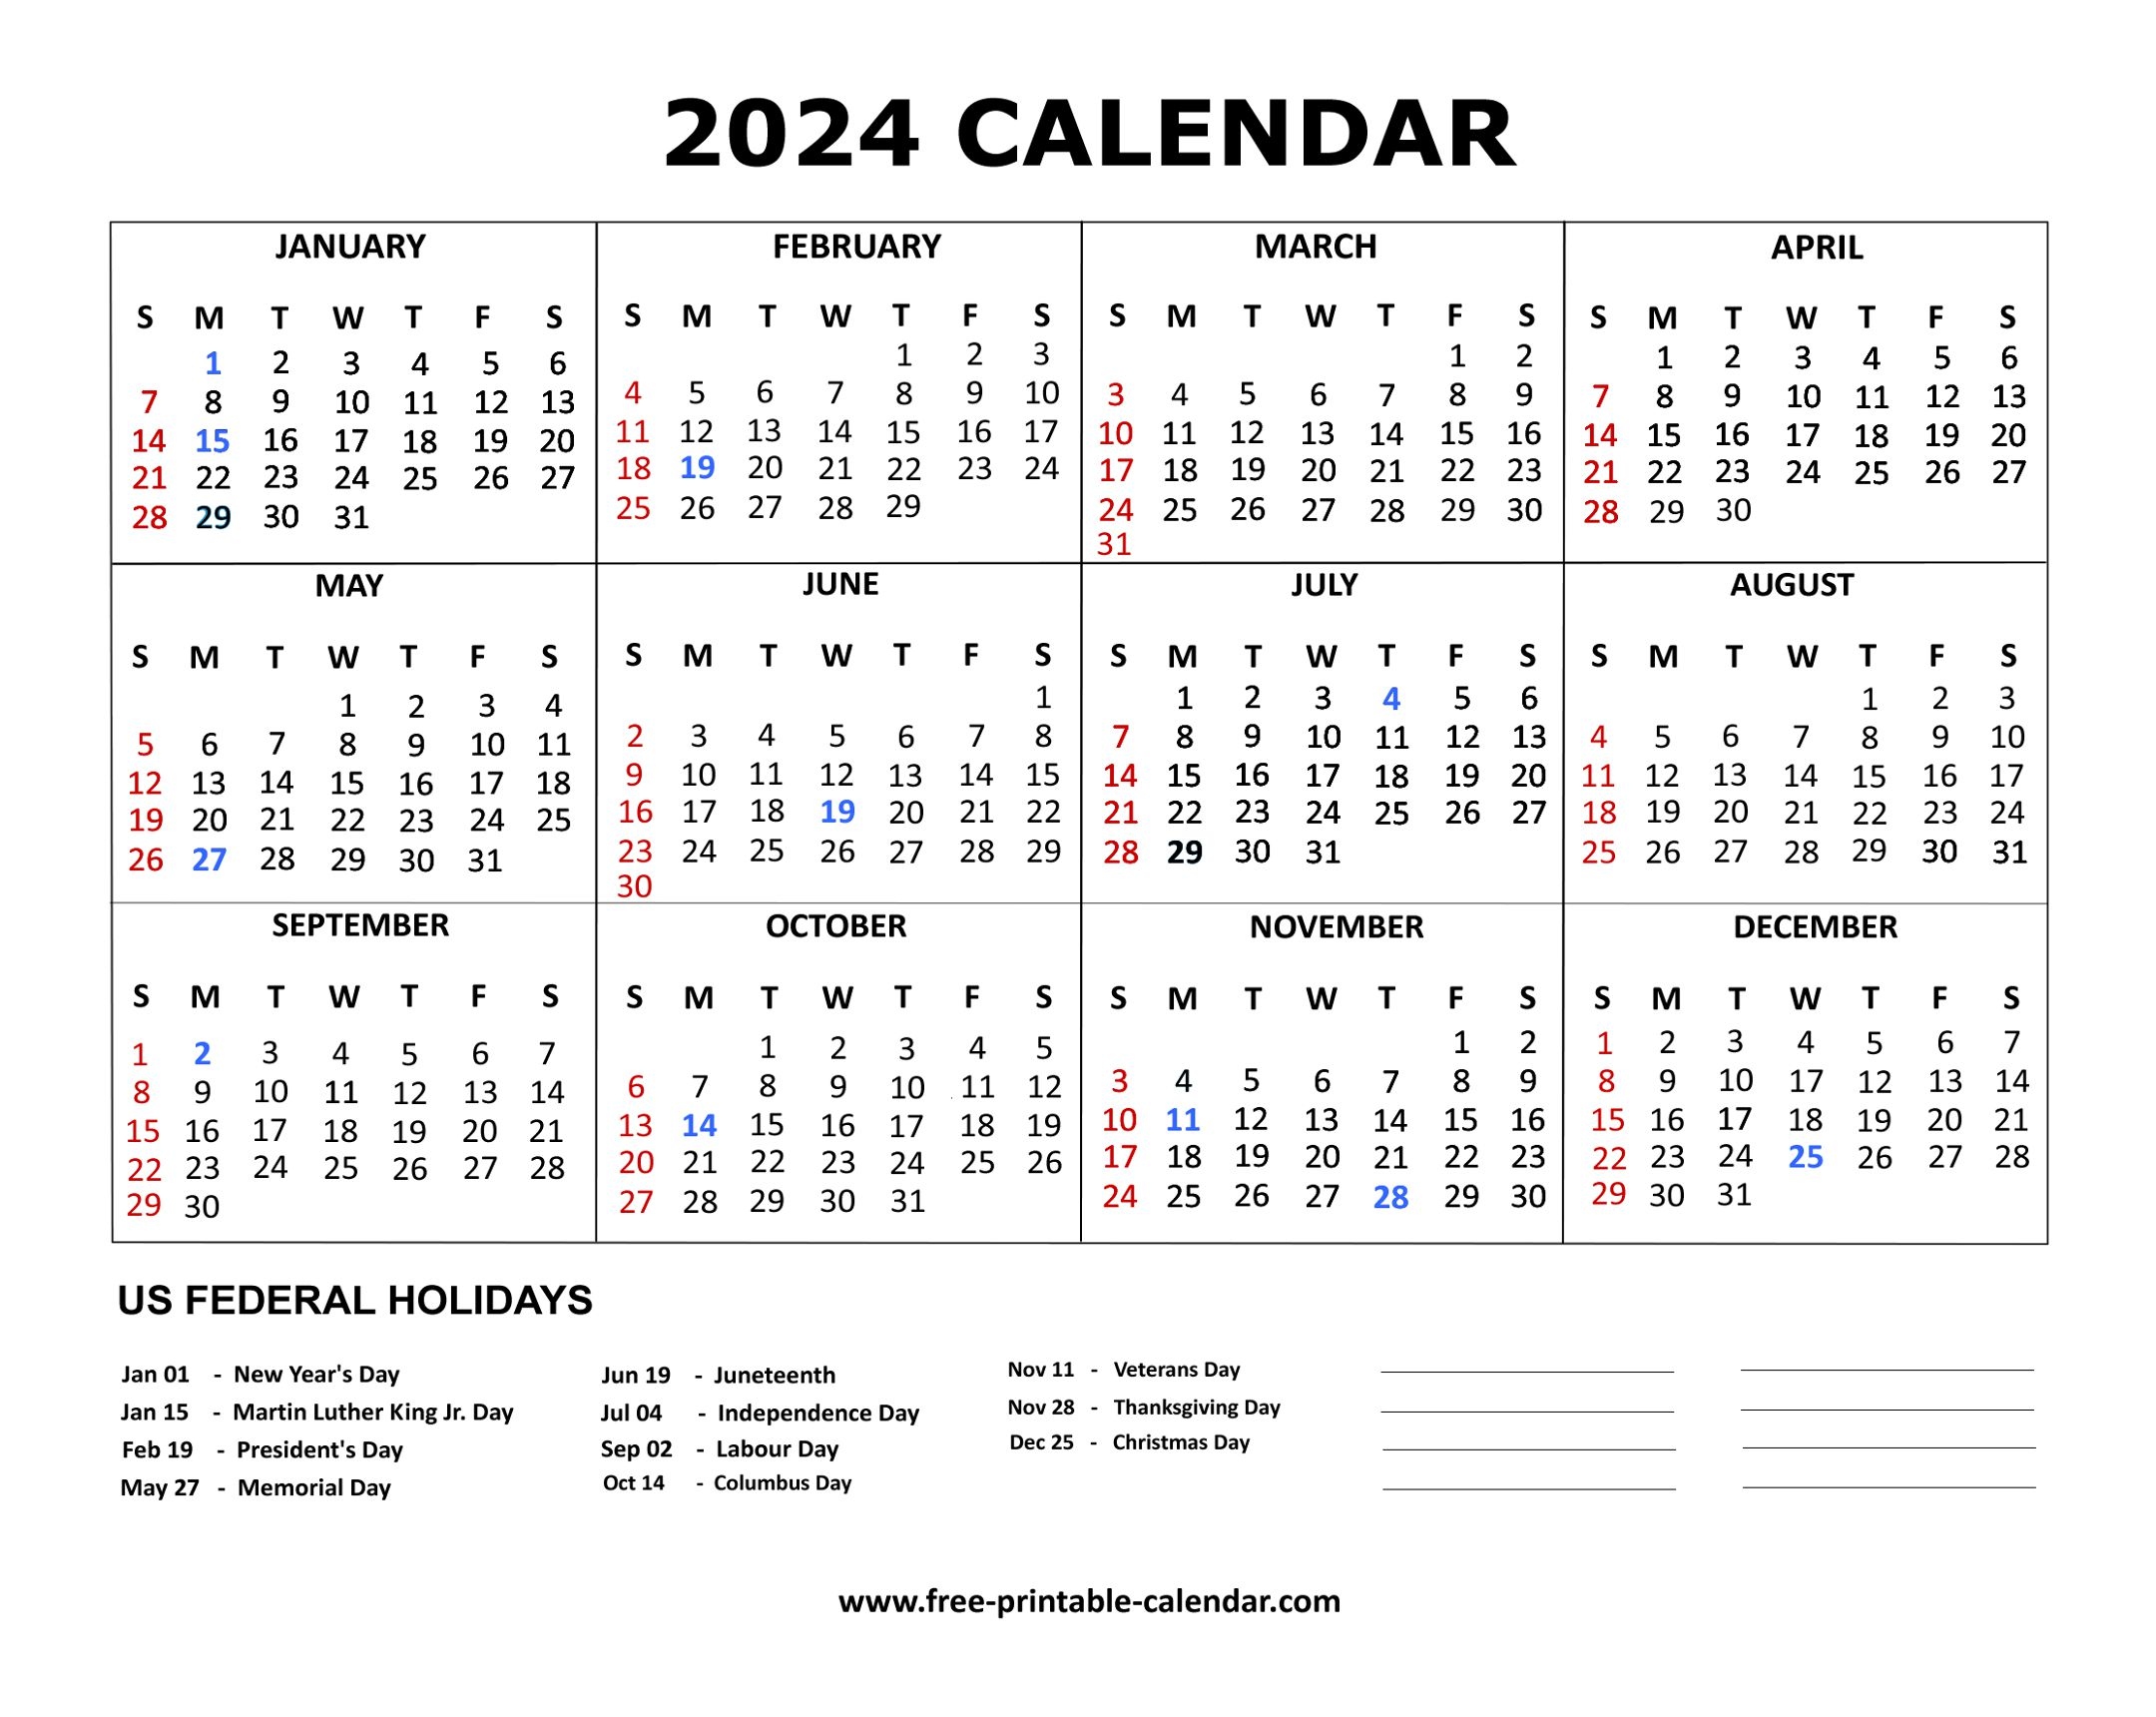 2024 Calendar with regard to Free Printable Calendar 2024 With Holidays Pdf